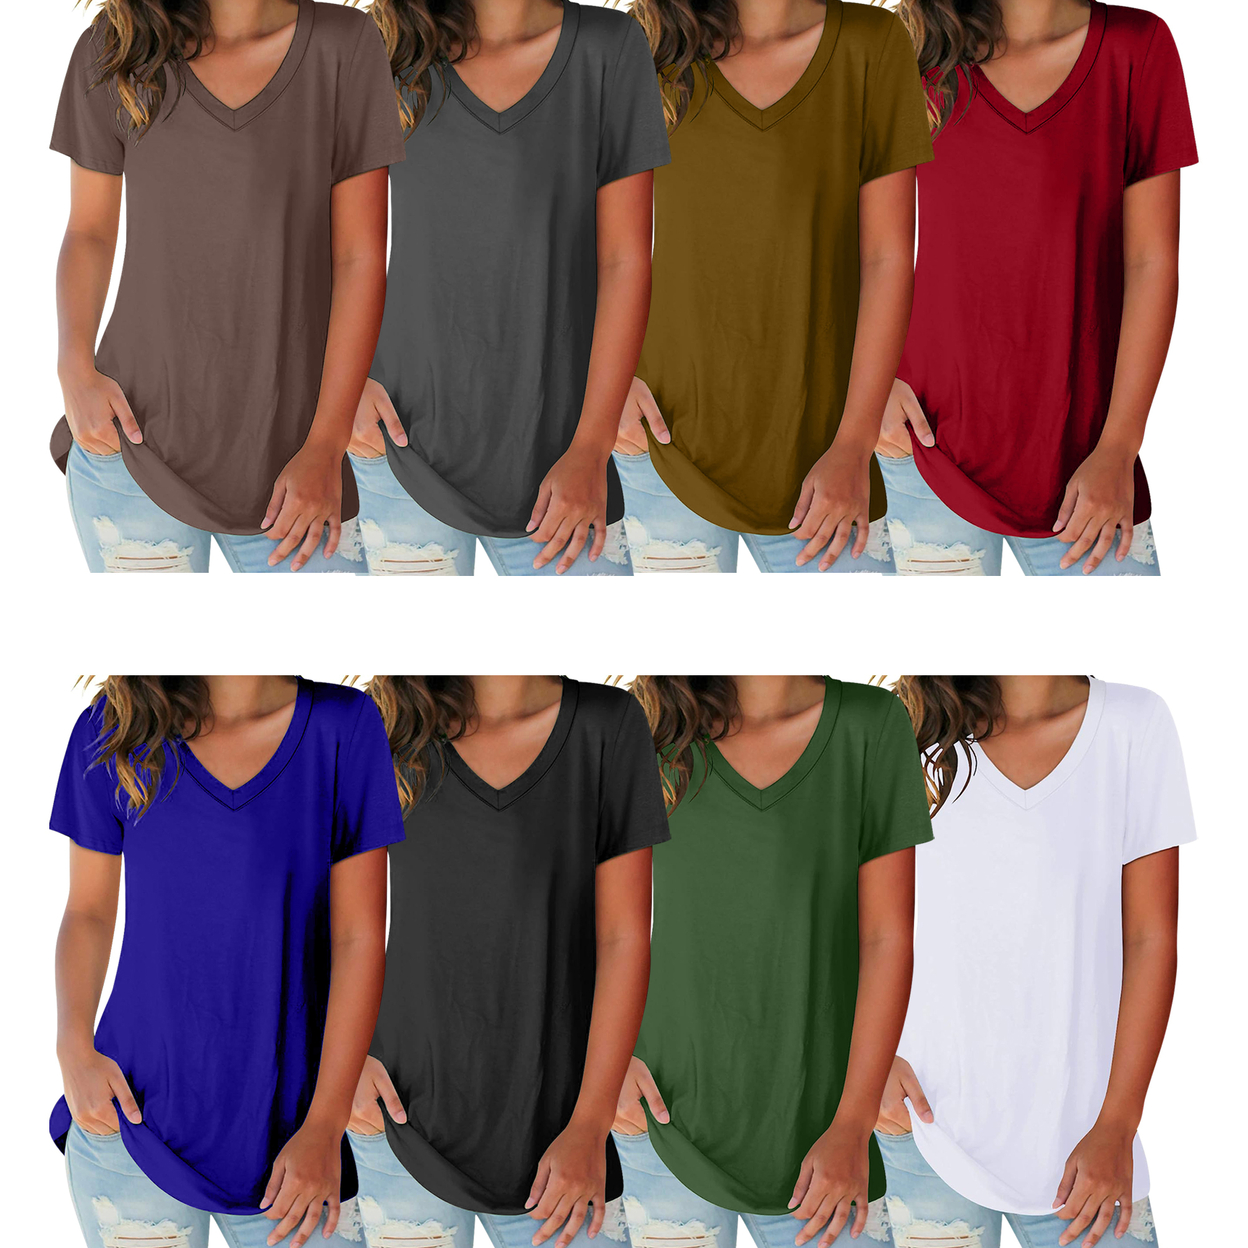 2-Pack: Women's Ultra Soft Smooth Cotton Blend Basic V-Neck Short Sleeve Shirts - Grey & Navy, X-large